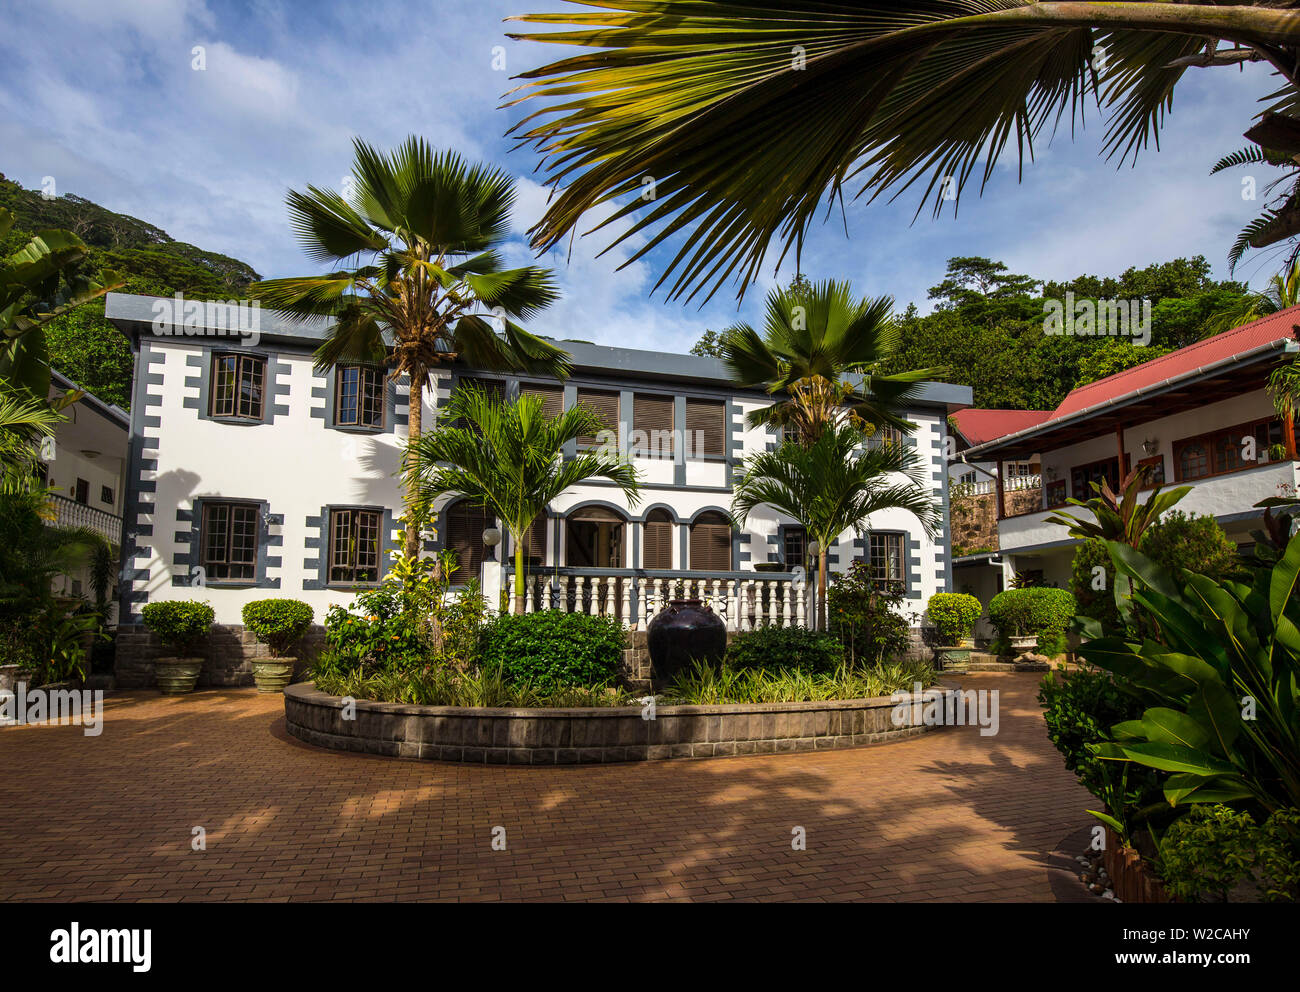 Chateau St. Cloud hotel, La Digue, Seychelles Stock Photo